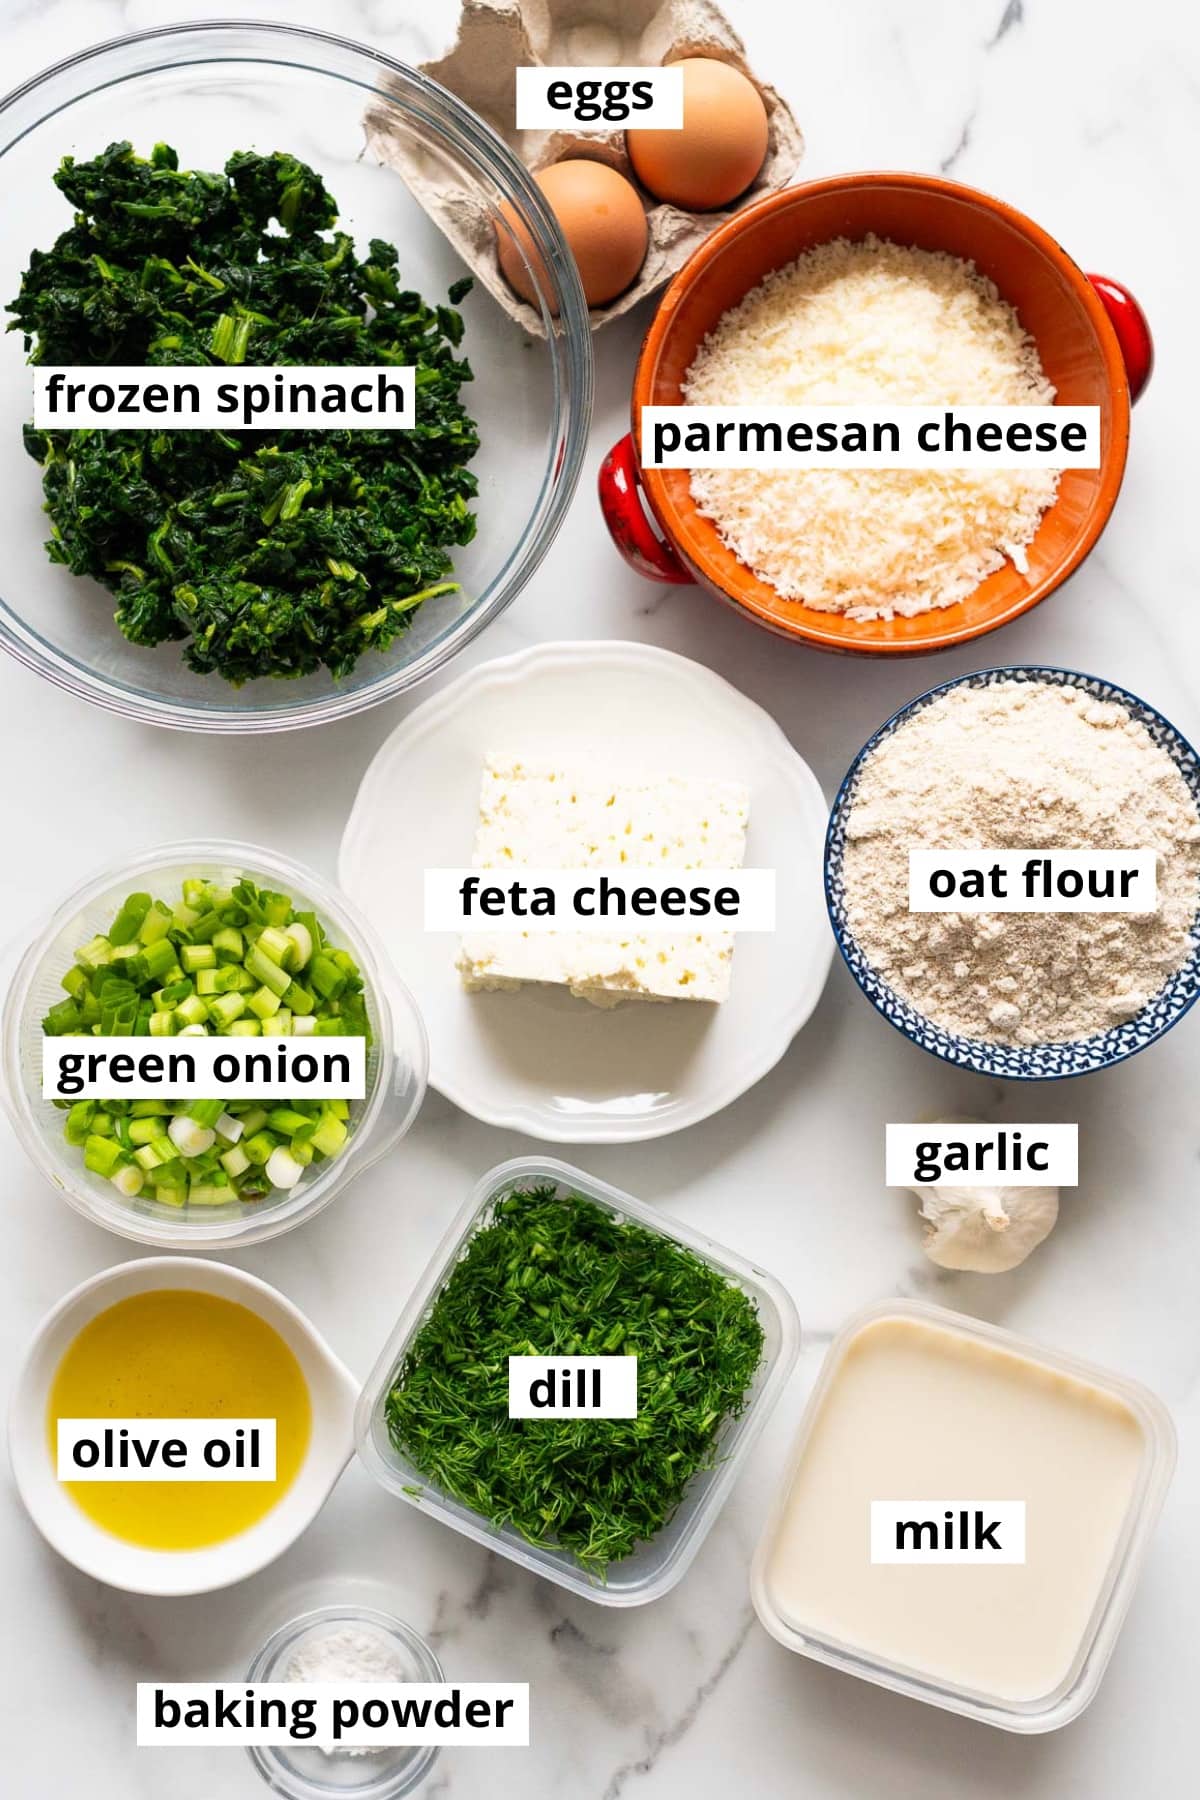 Frozen spinach, feta cheese, parmesan cheese, eggs, oat flour, green onion, garlic, dill, milk, olive oil, baking powder.